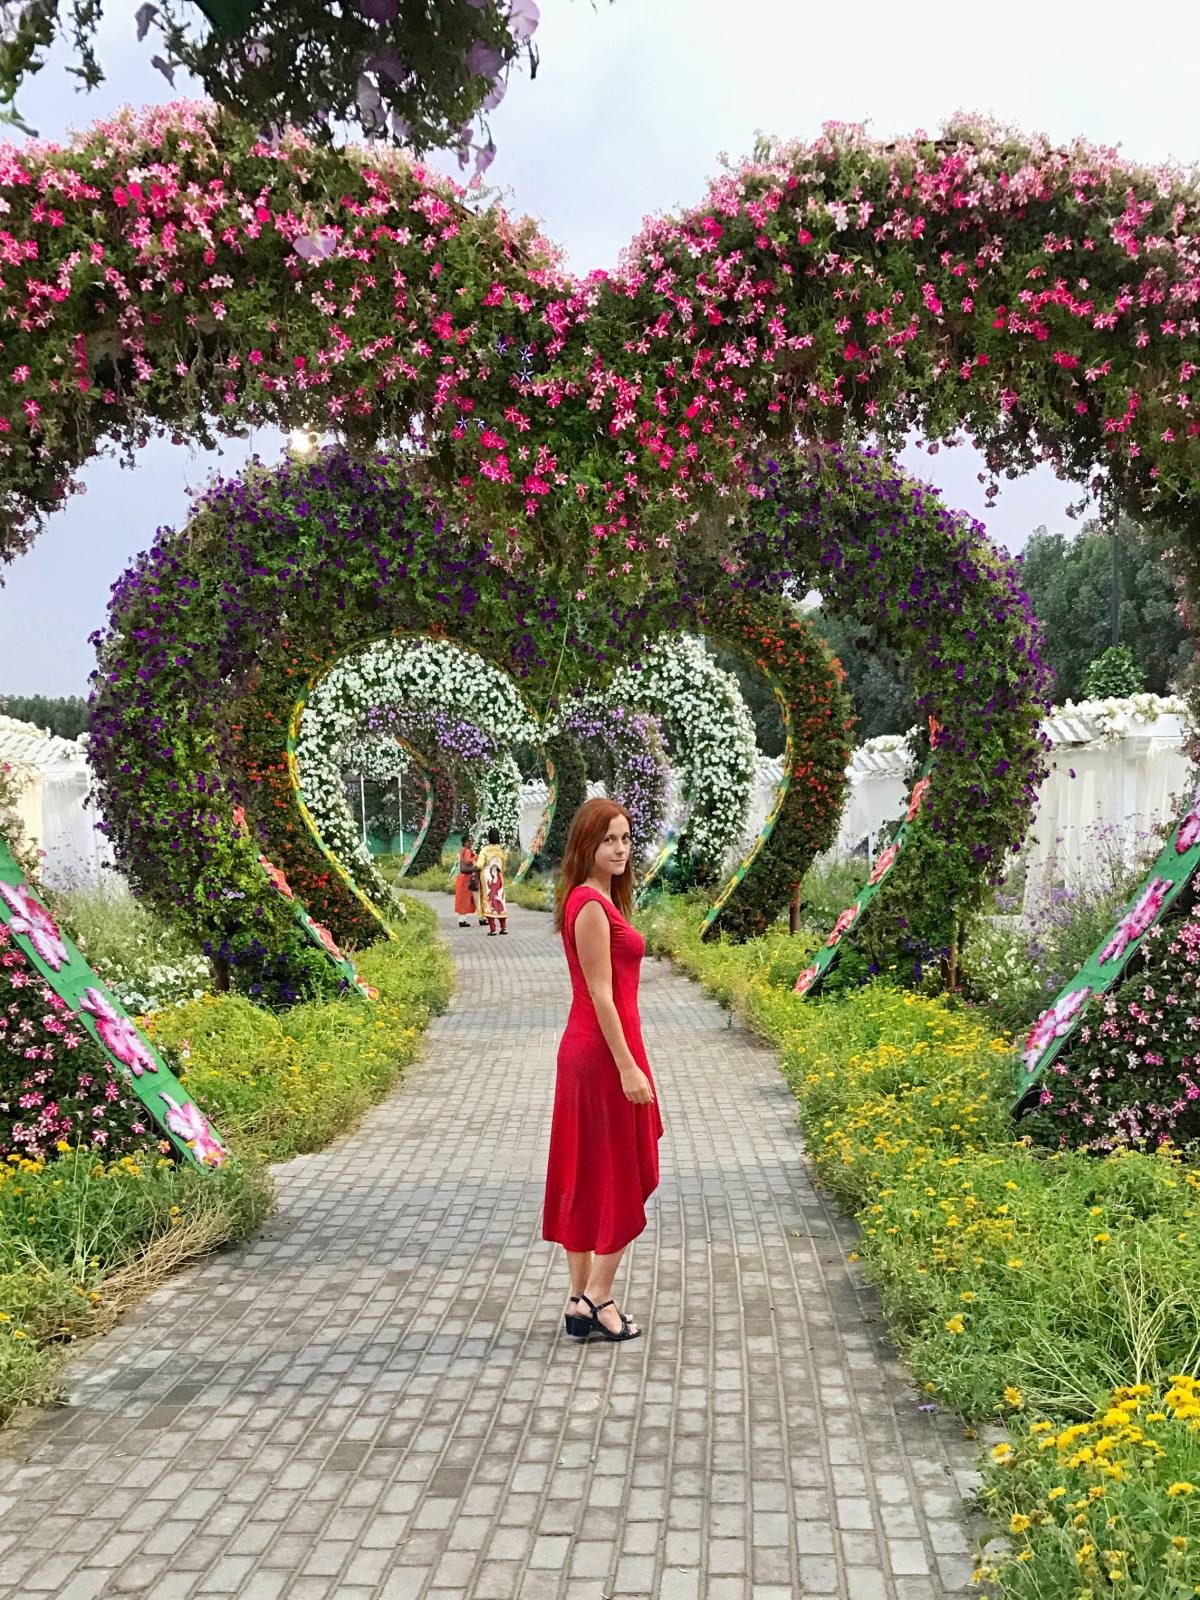 dubai miracle garden: must-visit place in dubai | anna everywhere